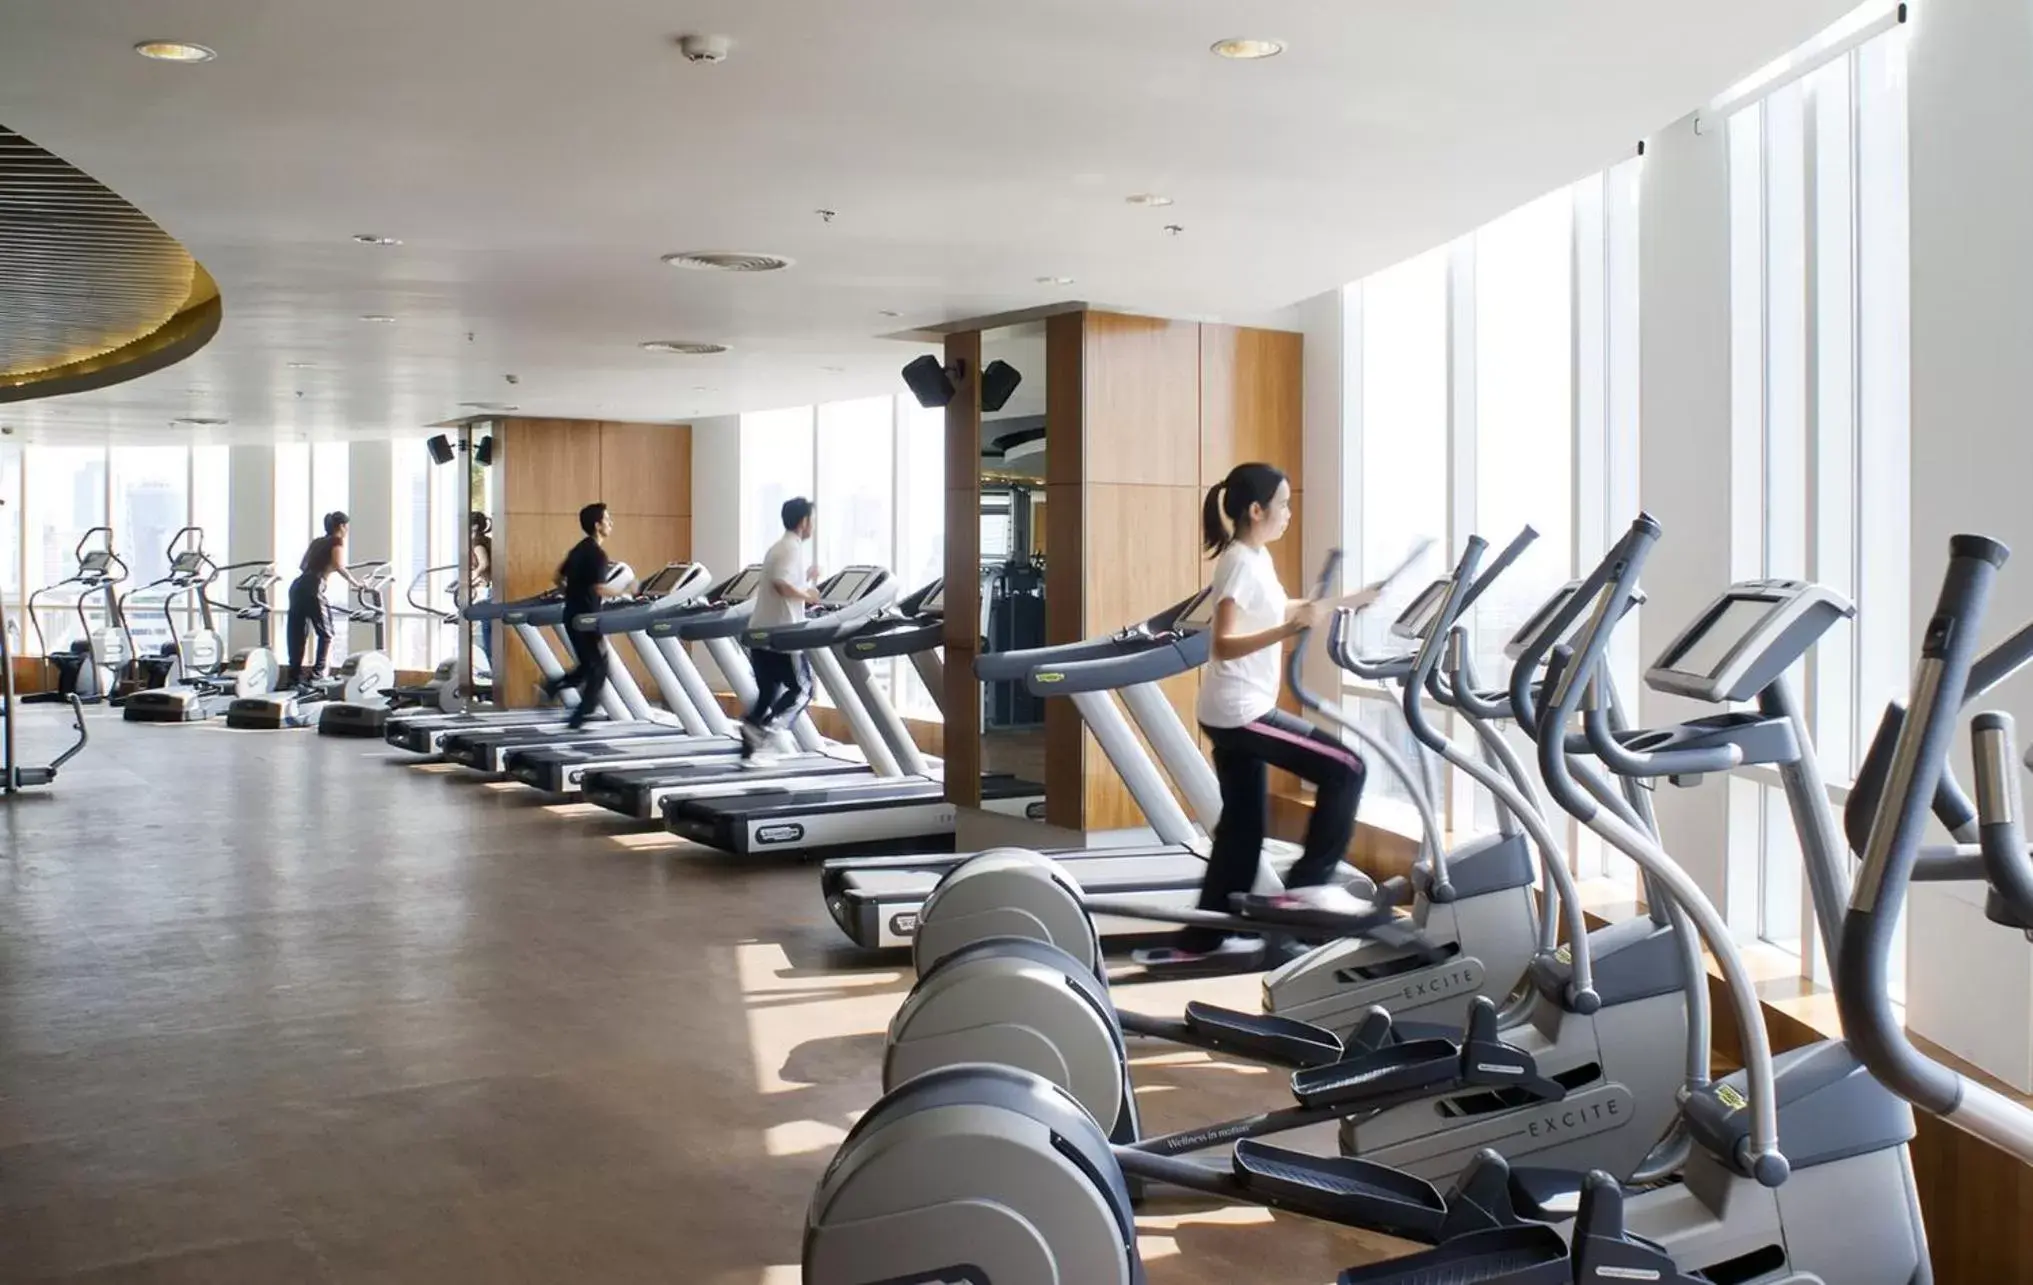 Fitness centre/facilities, Fitness Center/Facilities in Centara Grand At CentralWorld